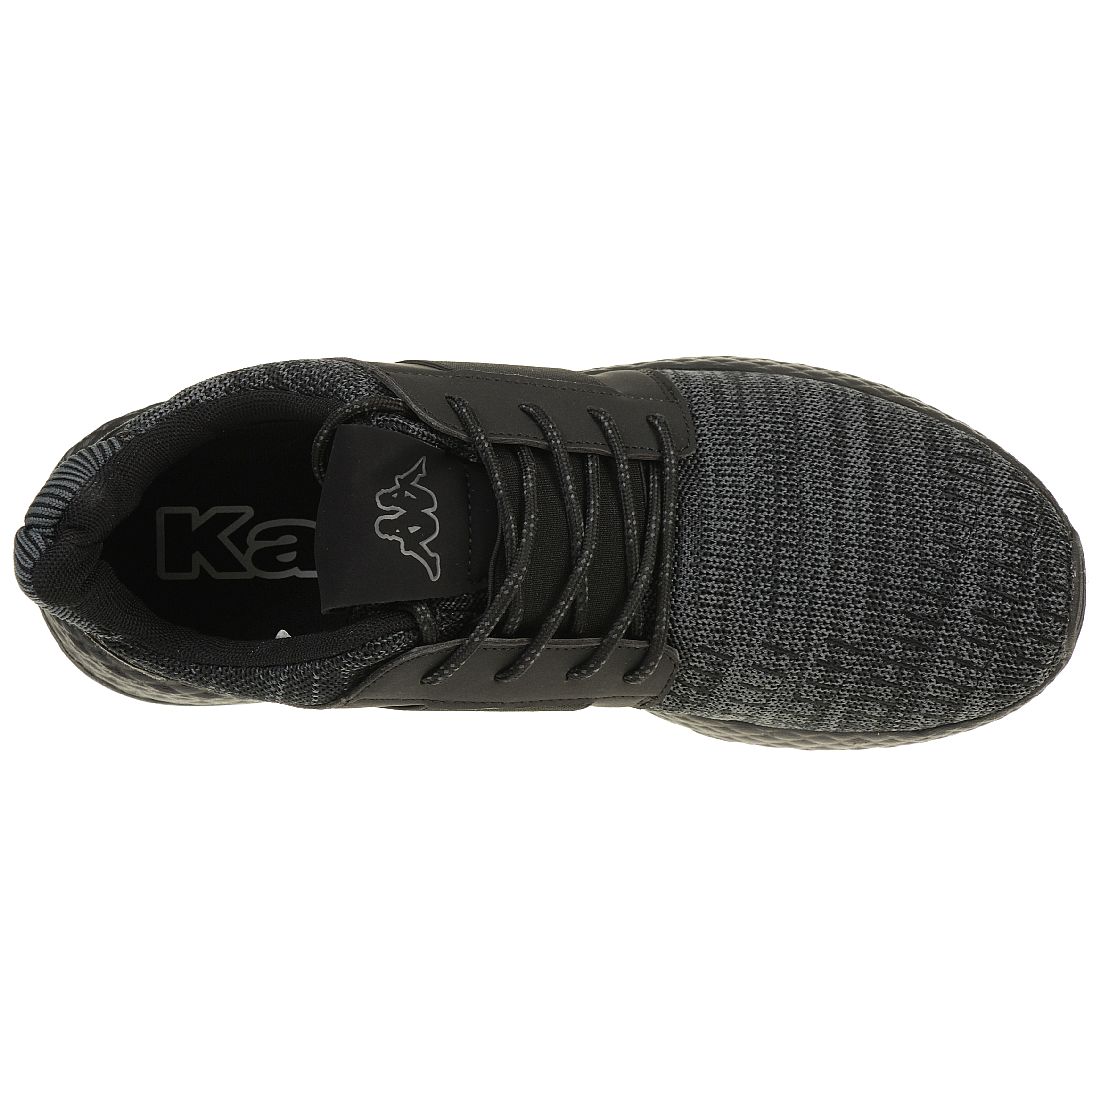 Kappa FEENY Sneaker Unisex Turnschuhe Schuhe schwarz 242683